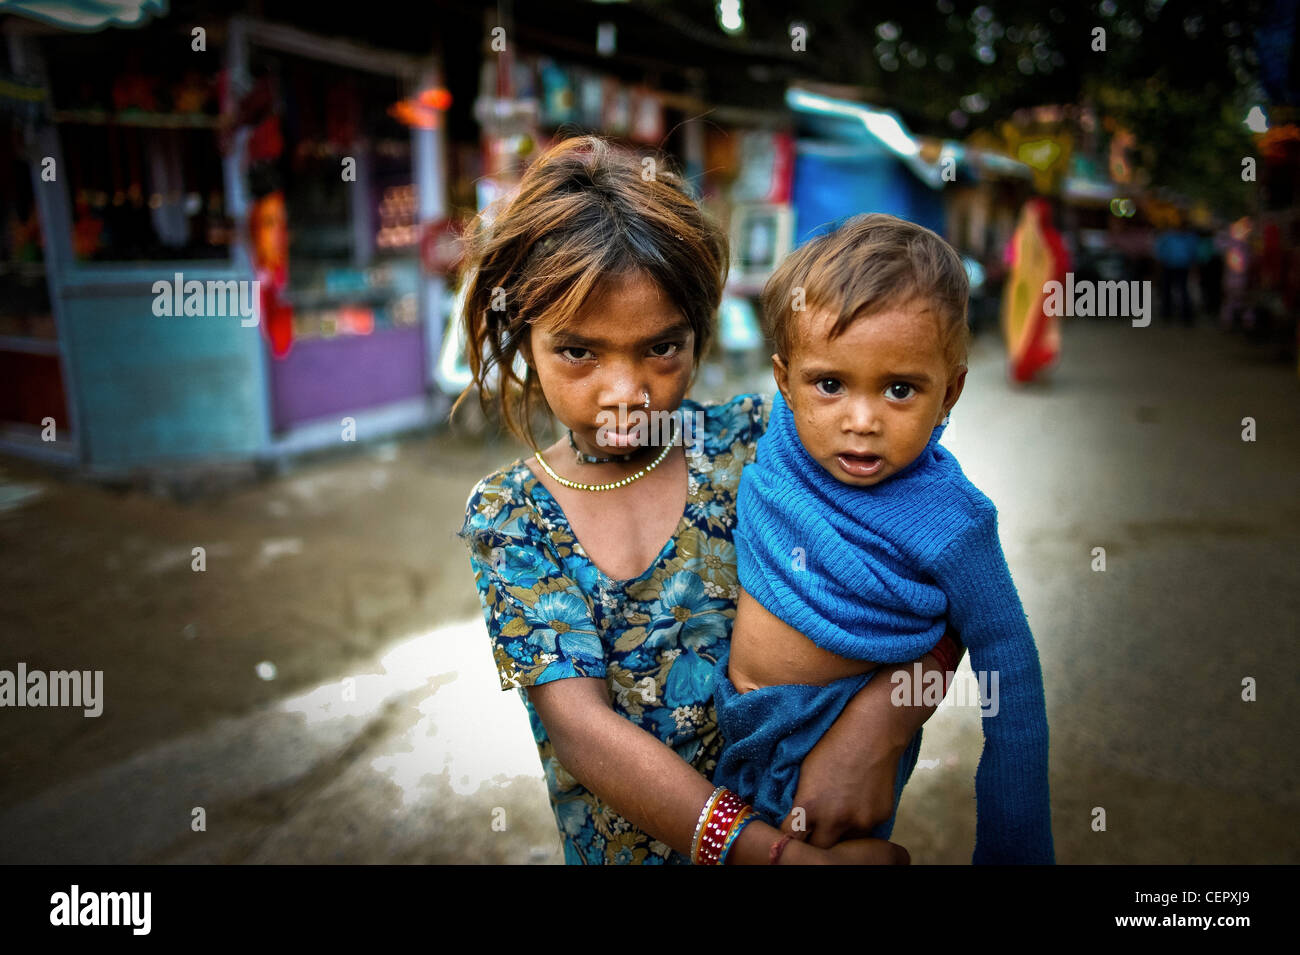 New Delhi, Children in India Stock Photo